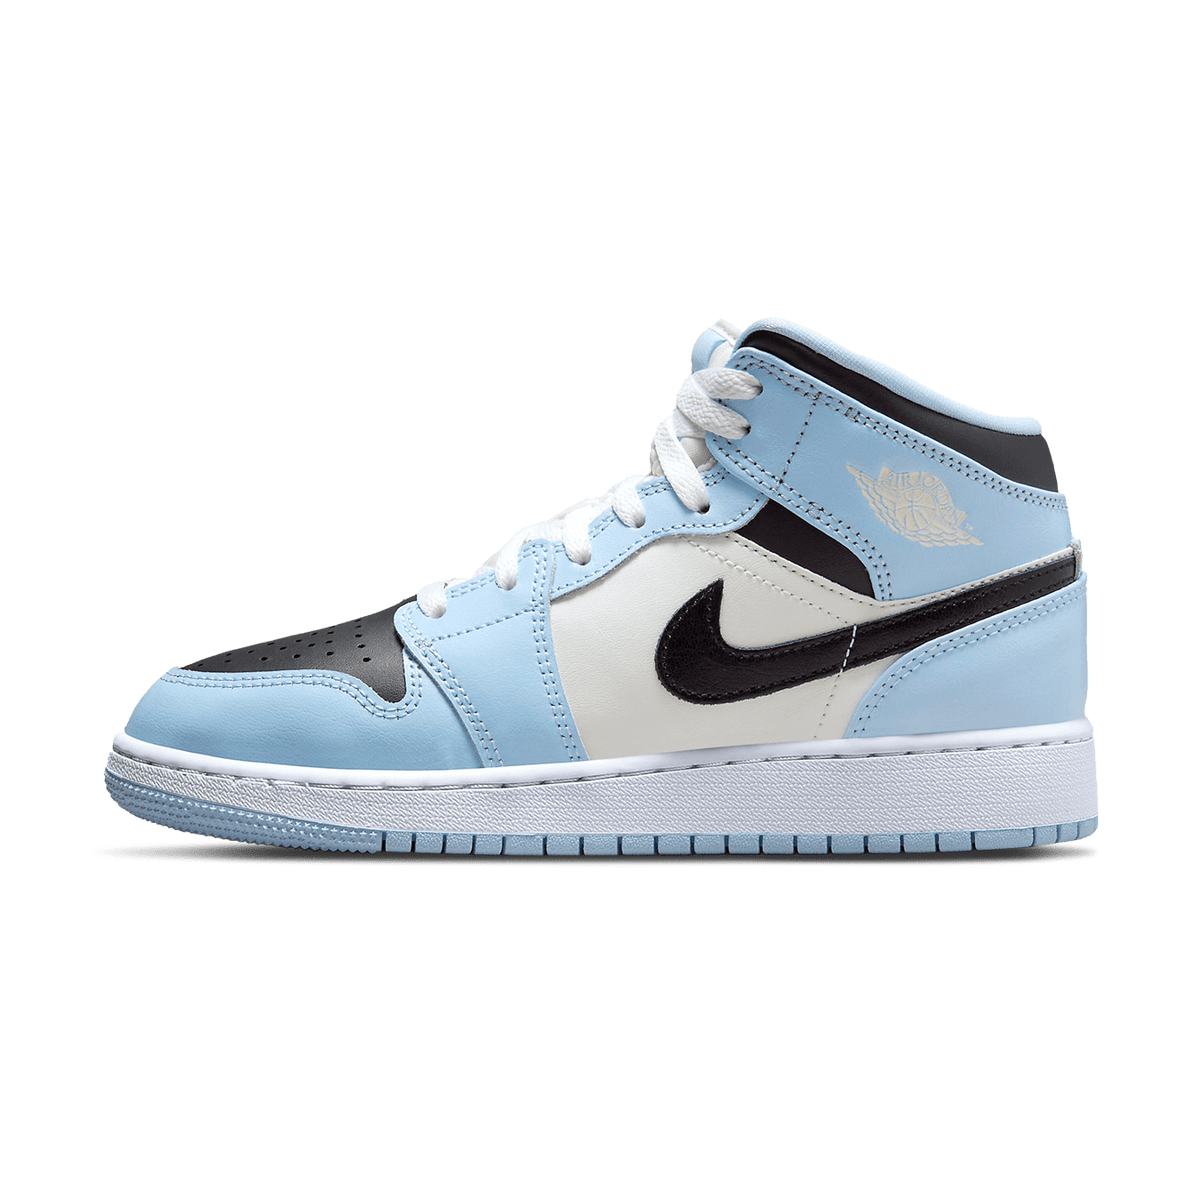 Nike Air Jordan 1 High OG (1985) 'Carolina Blue', Size 9.5, Michael Jordan, Shattered, 2020